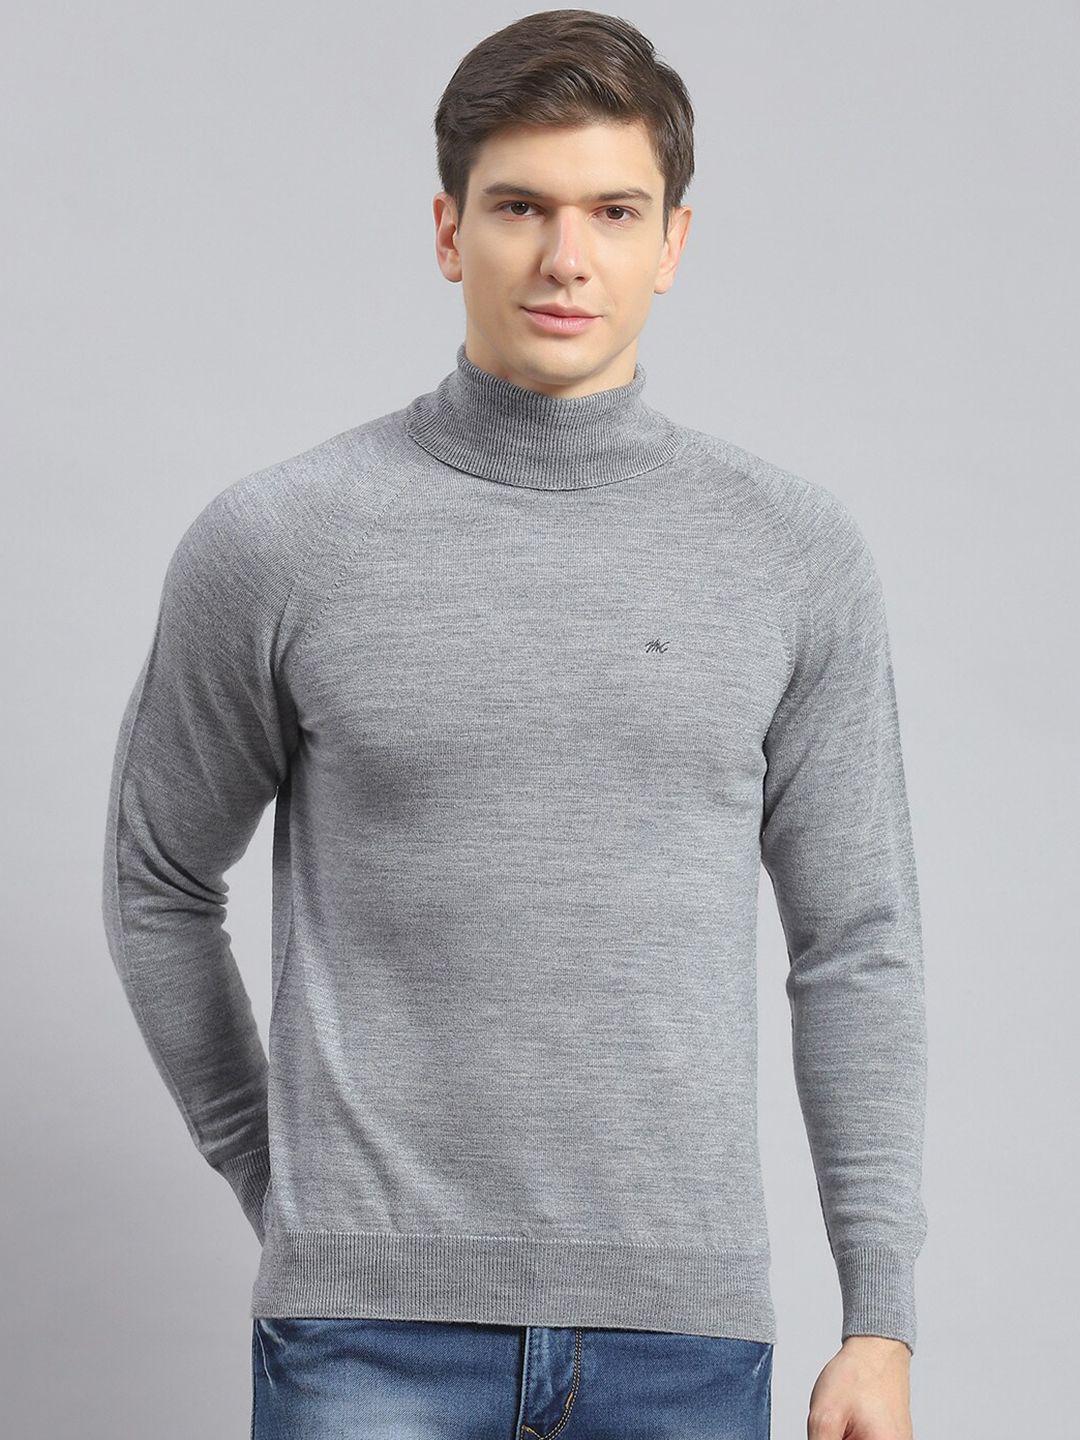 monte carlo turtle neck woollen pullover sweater